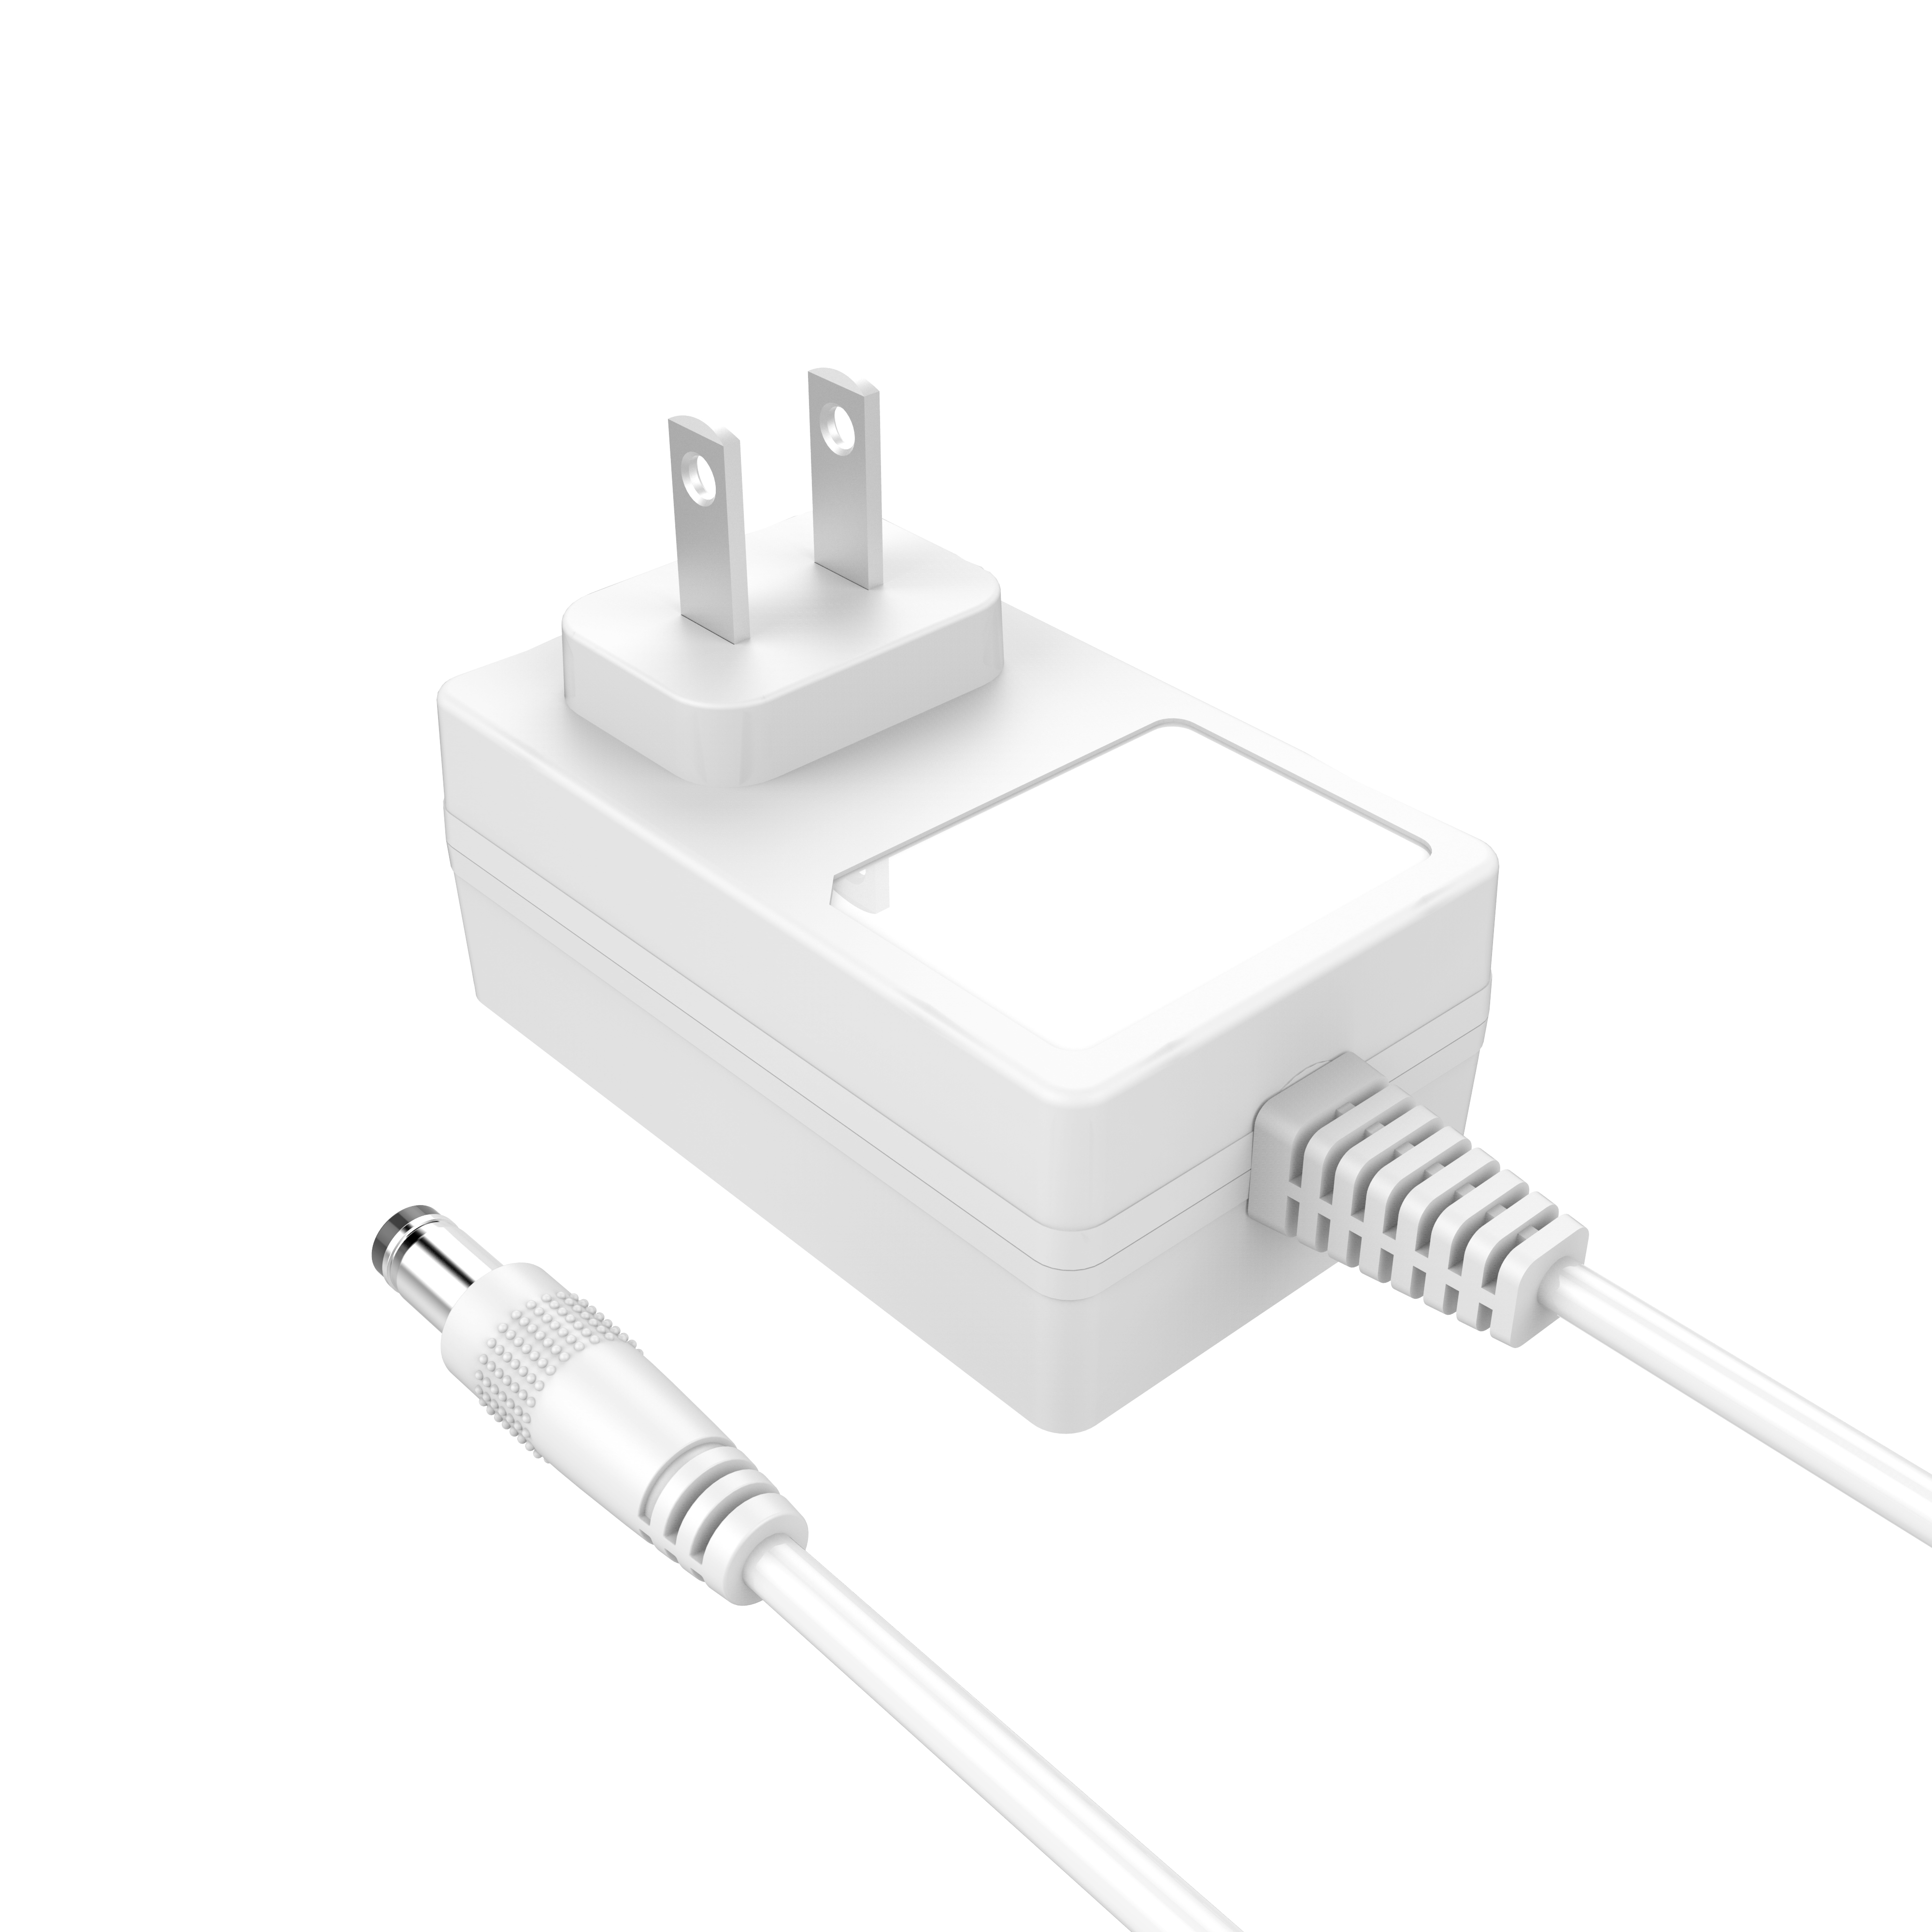 us plug adaptor 0.5a 1a 1.5a 2a 3a 3.5a 6v 9v 12v 24w ac dc power adapter with ETL1310 FCC UL62368